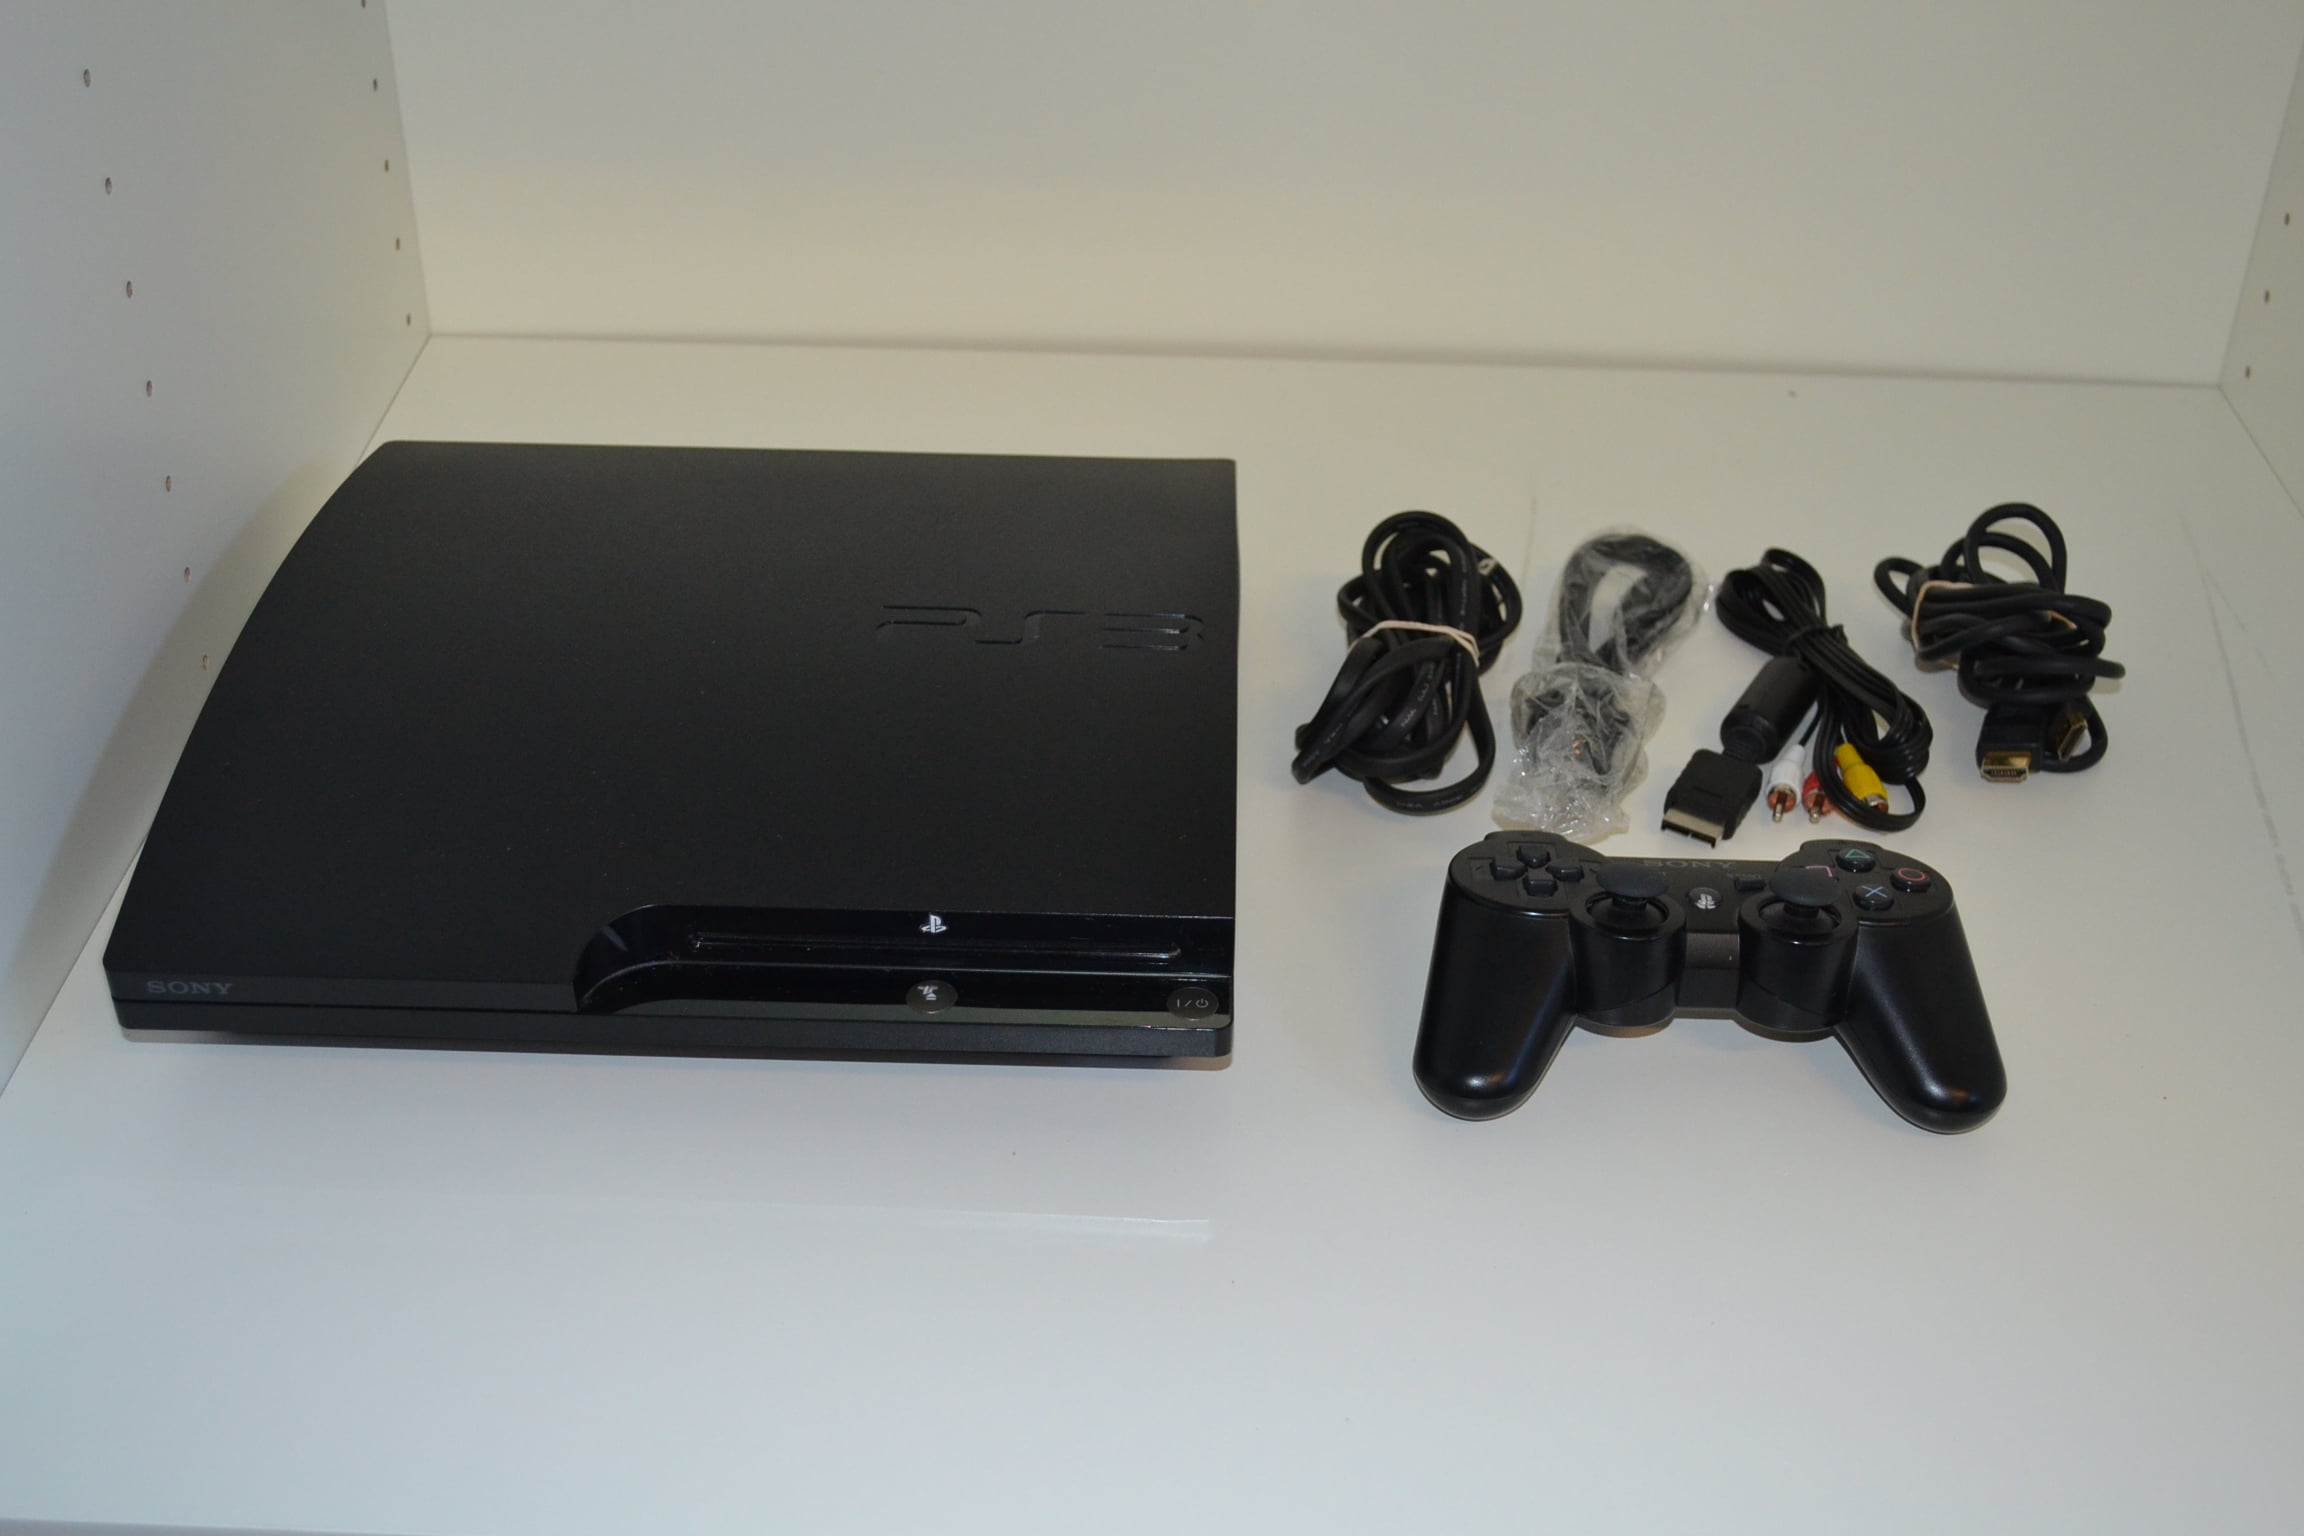 PlayStation 3 Slim -- photos - CNET